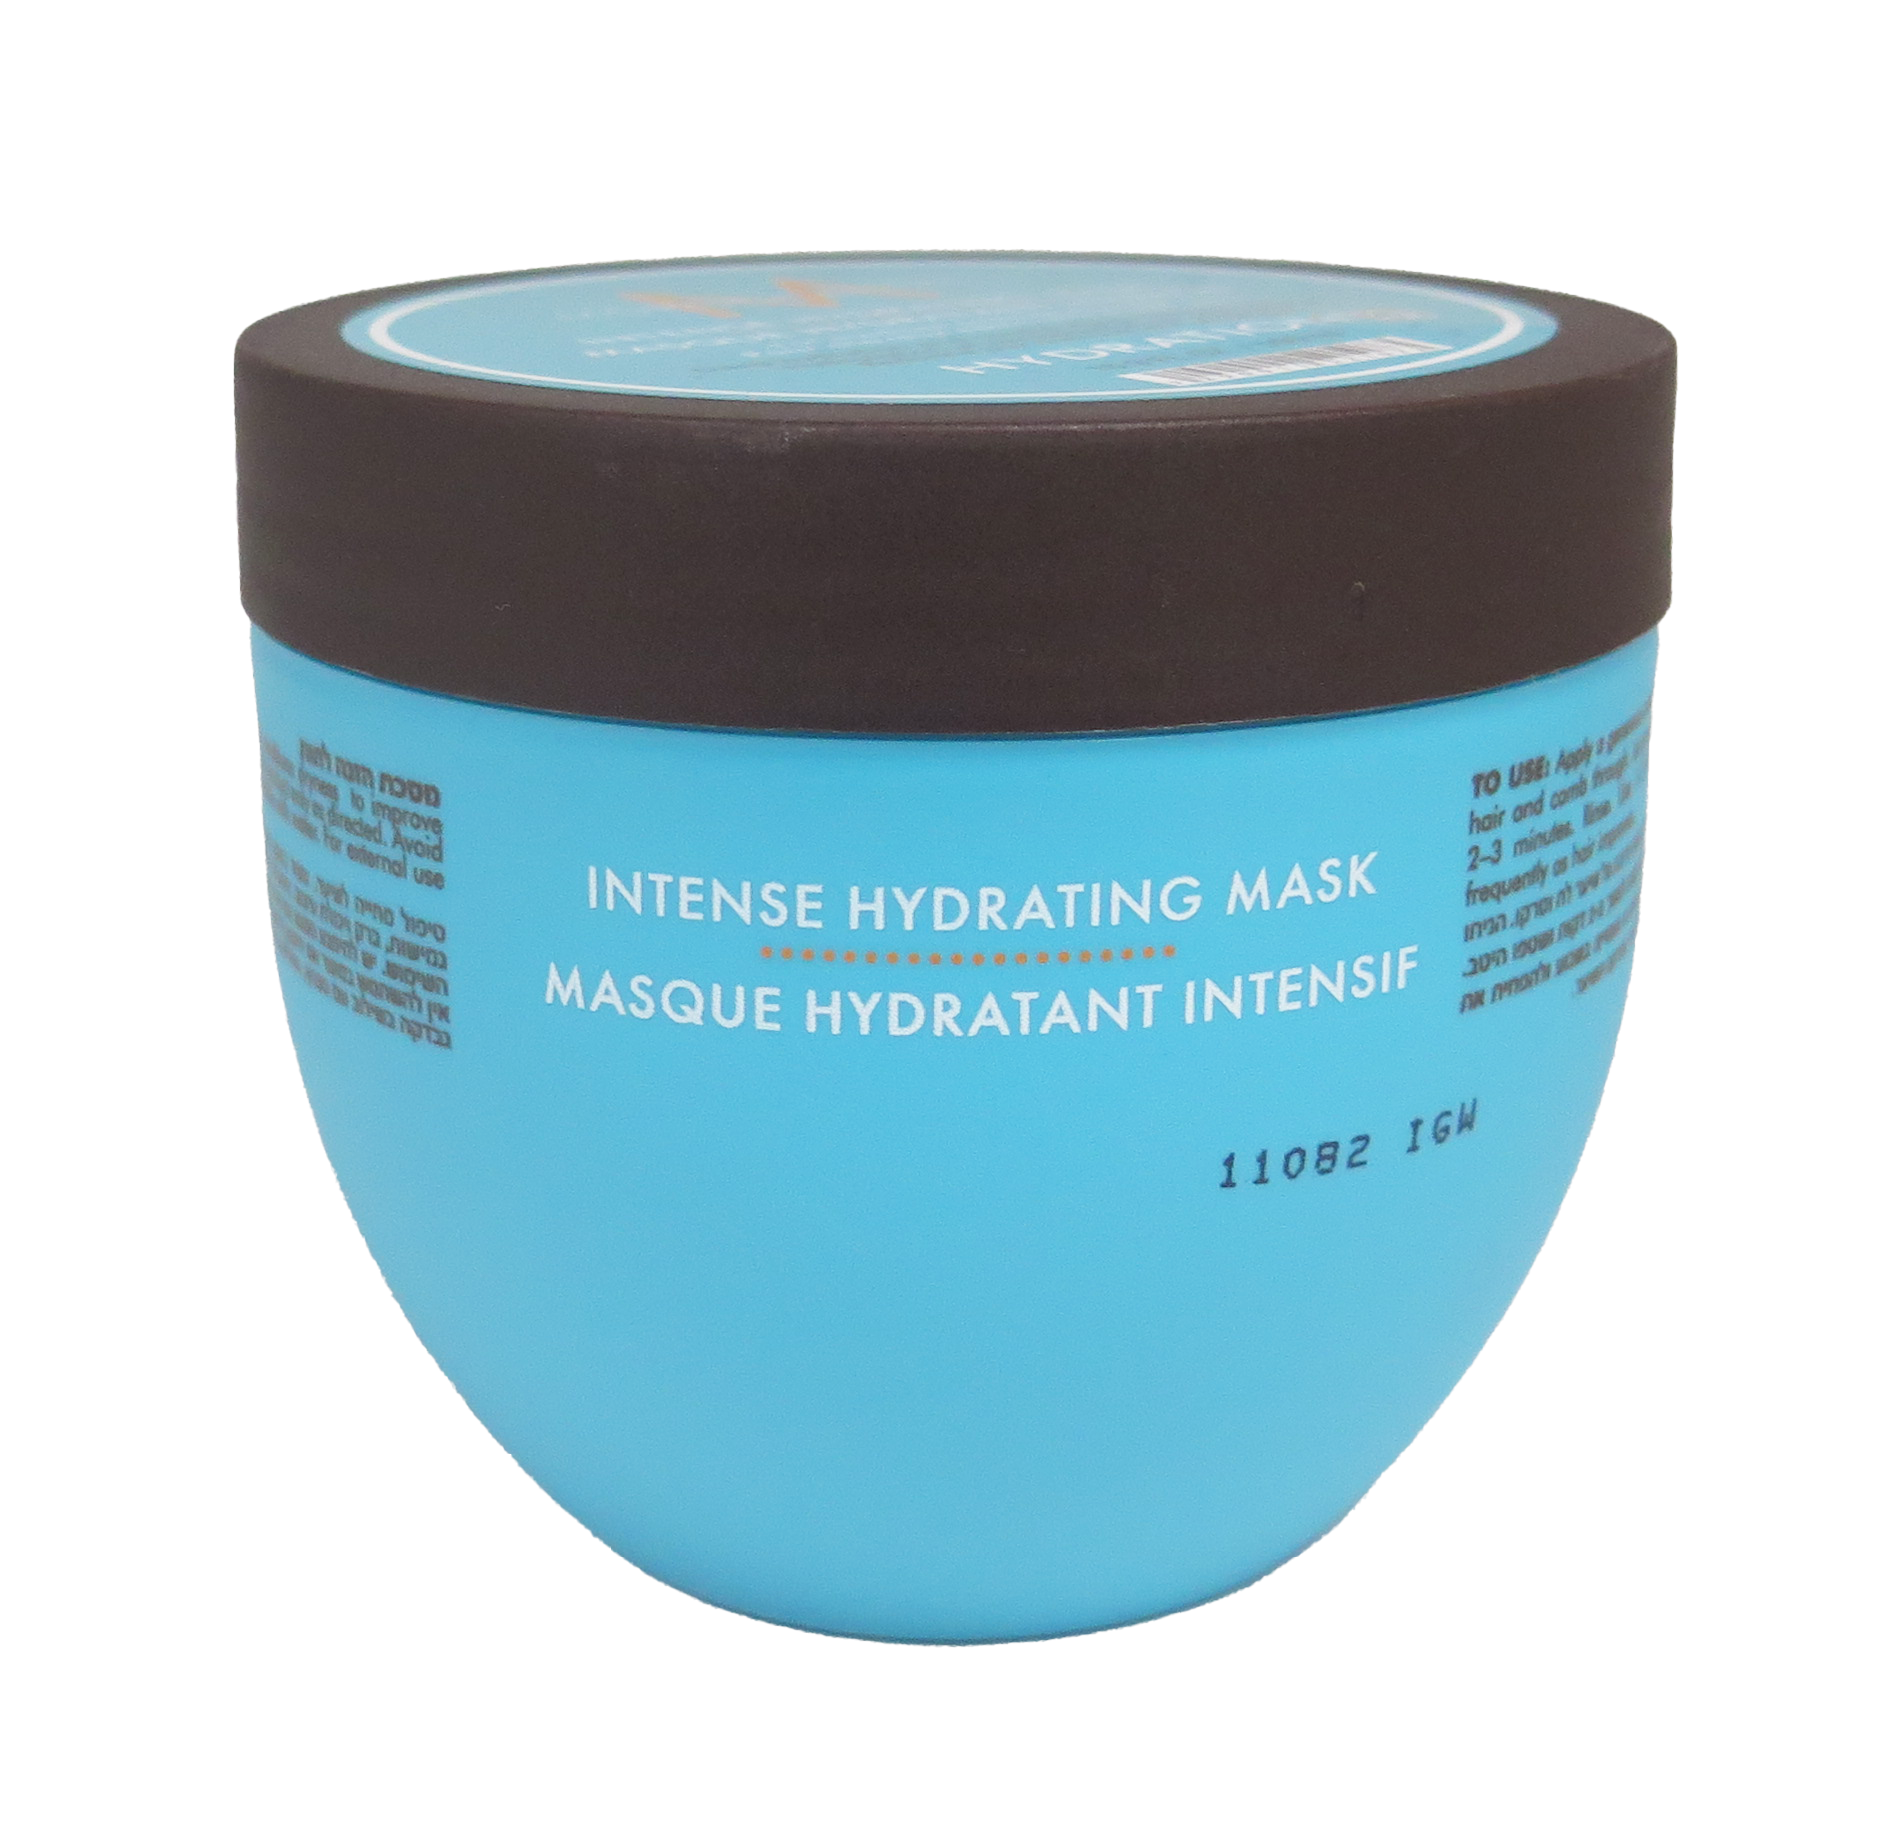 Moroccanoil Intense Hydrating Mask 16.9 fl oz